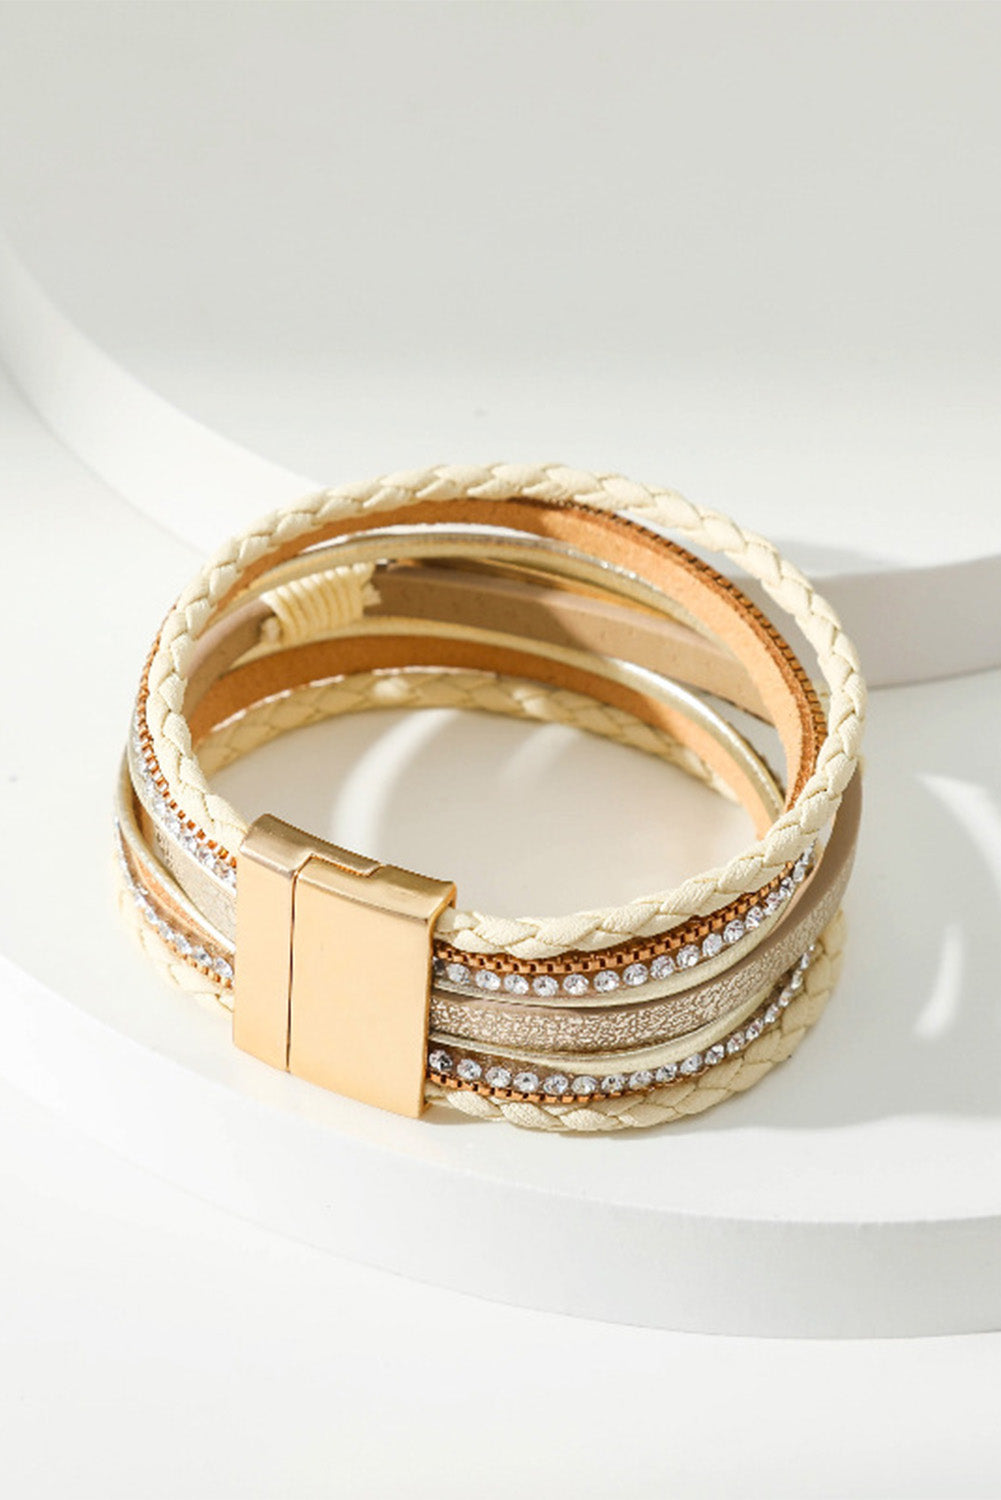 Beige BLESSED Rhinestone Braided Detail Buckle Bracelet - SELFTRITSS